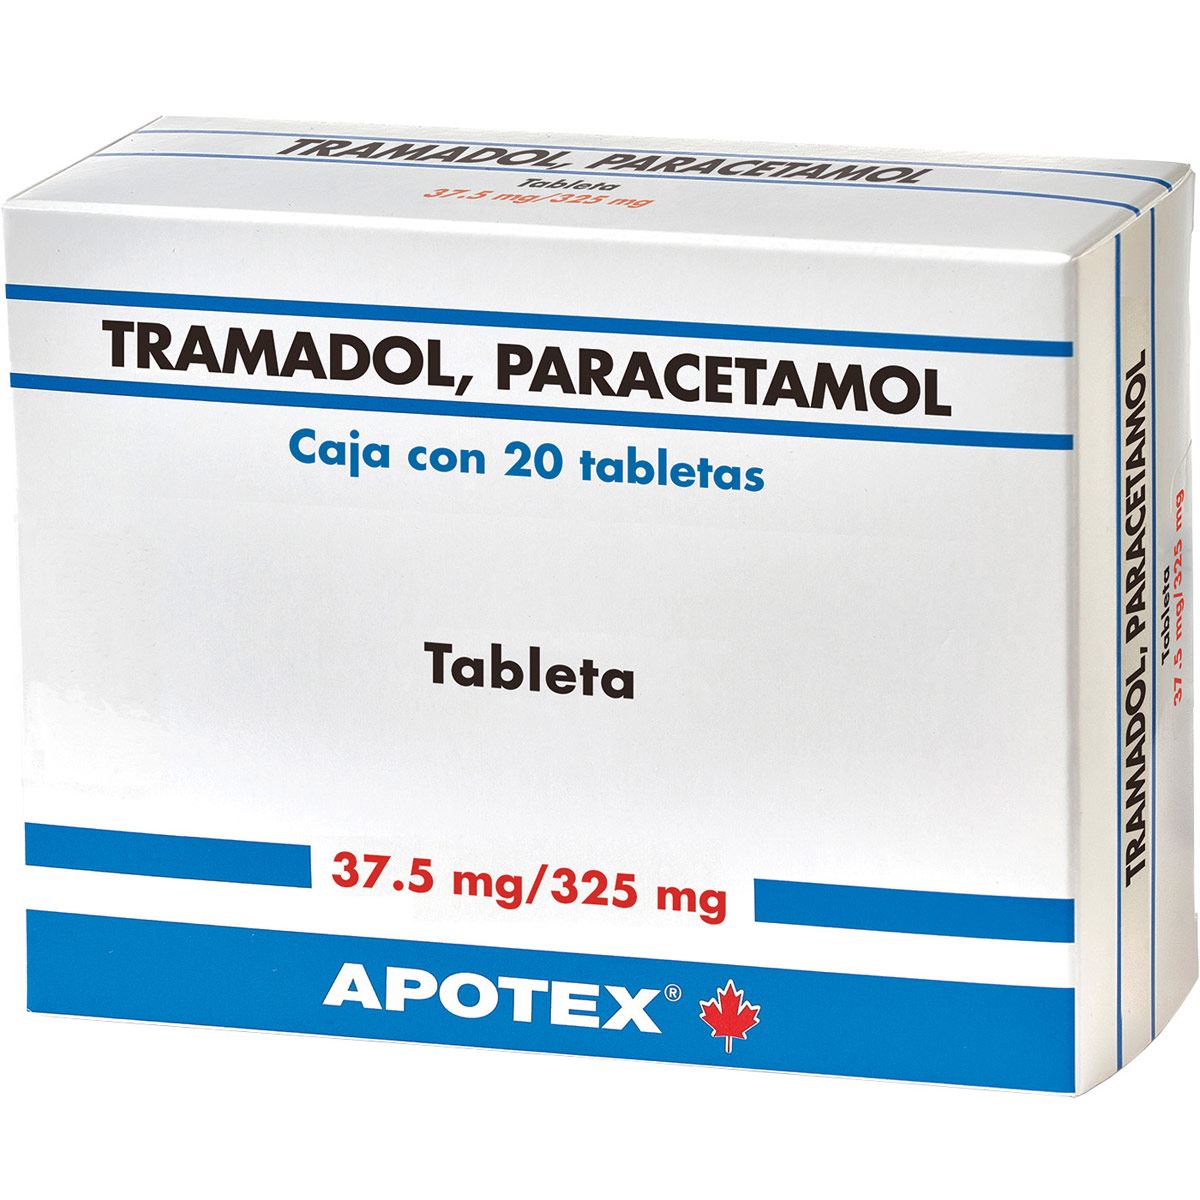 TRAMADOL / PARACETAMOL Caja/ blister 20 tabletas de 37.5 / 325 mg